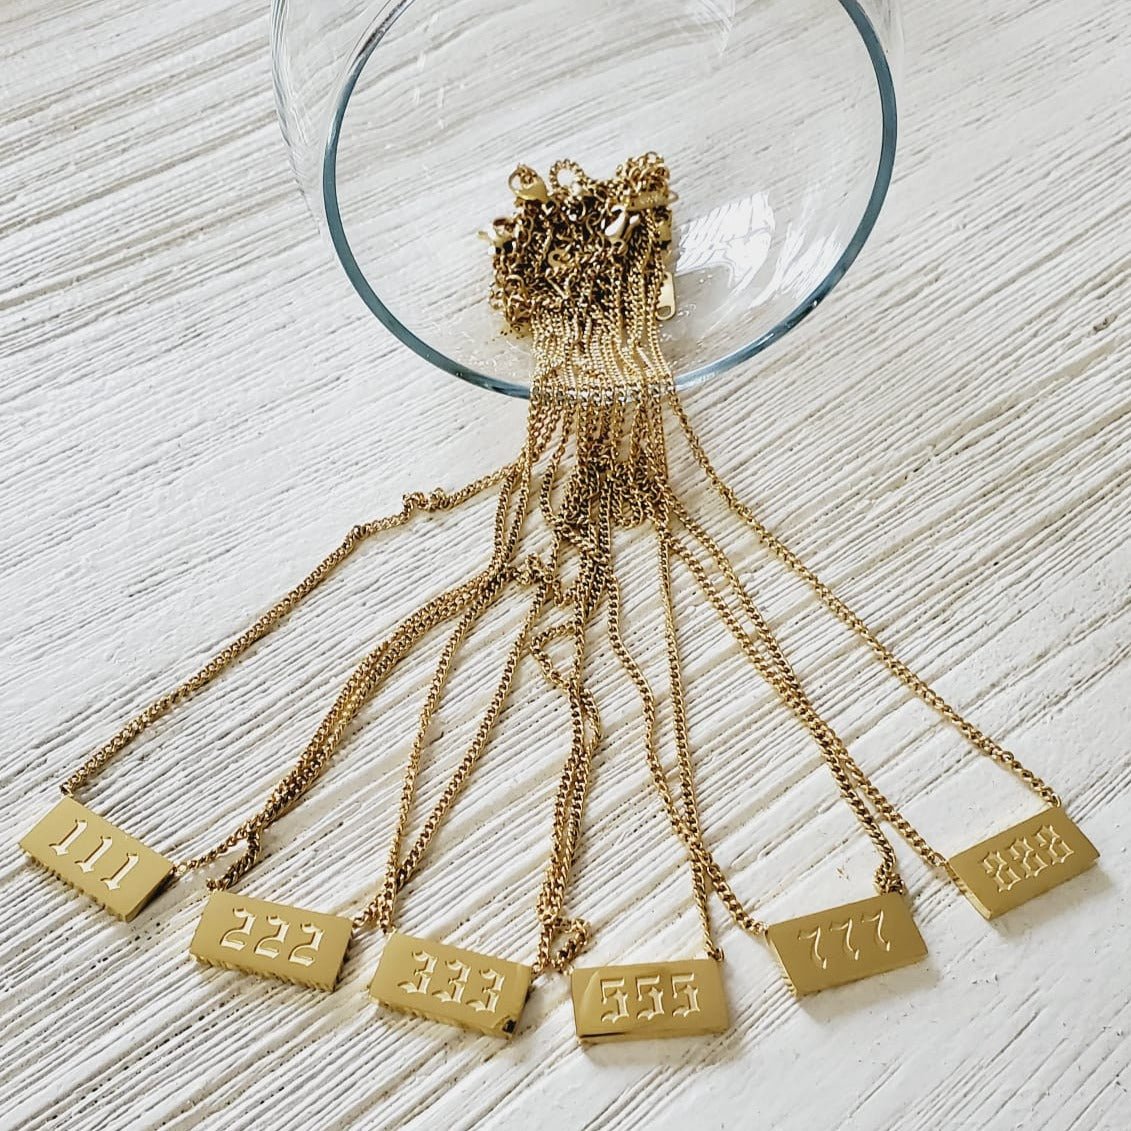 Angel Number Necklace – KimmyB Jewelry